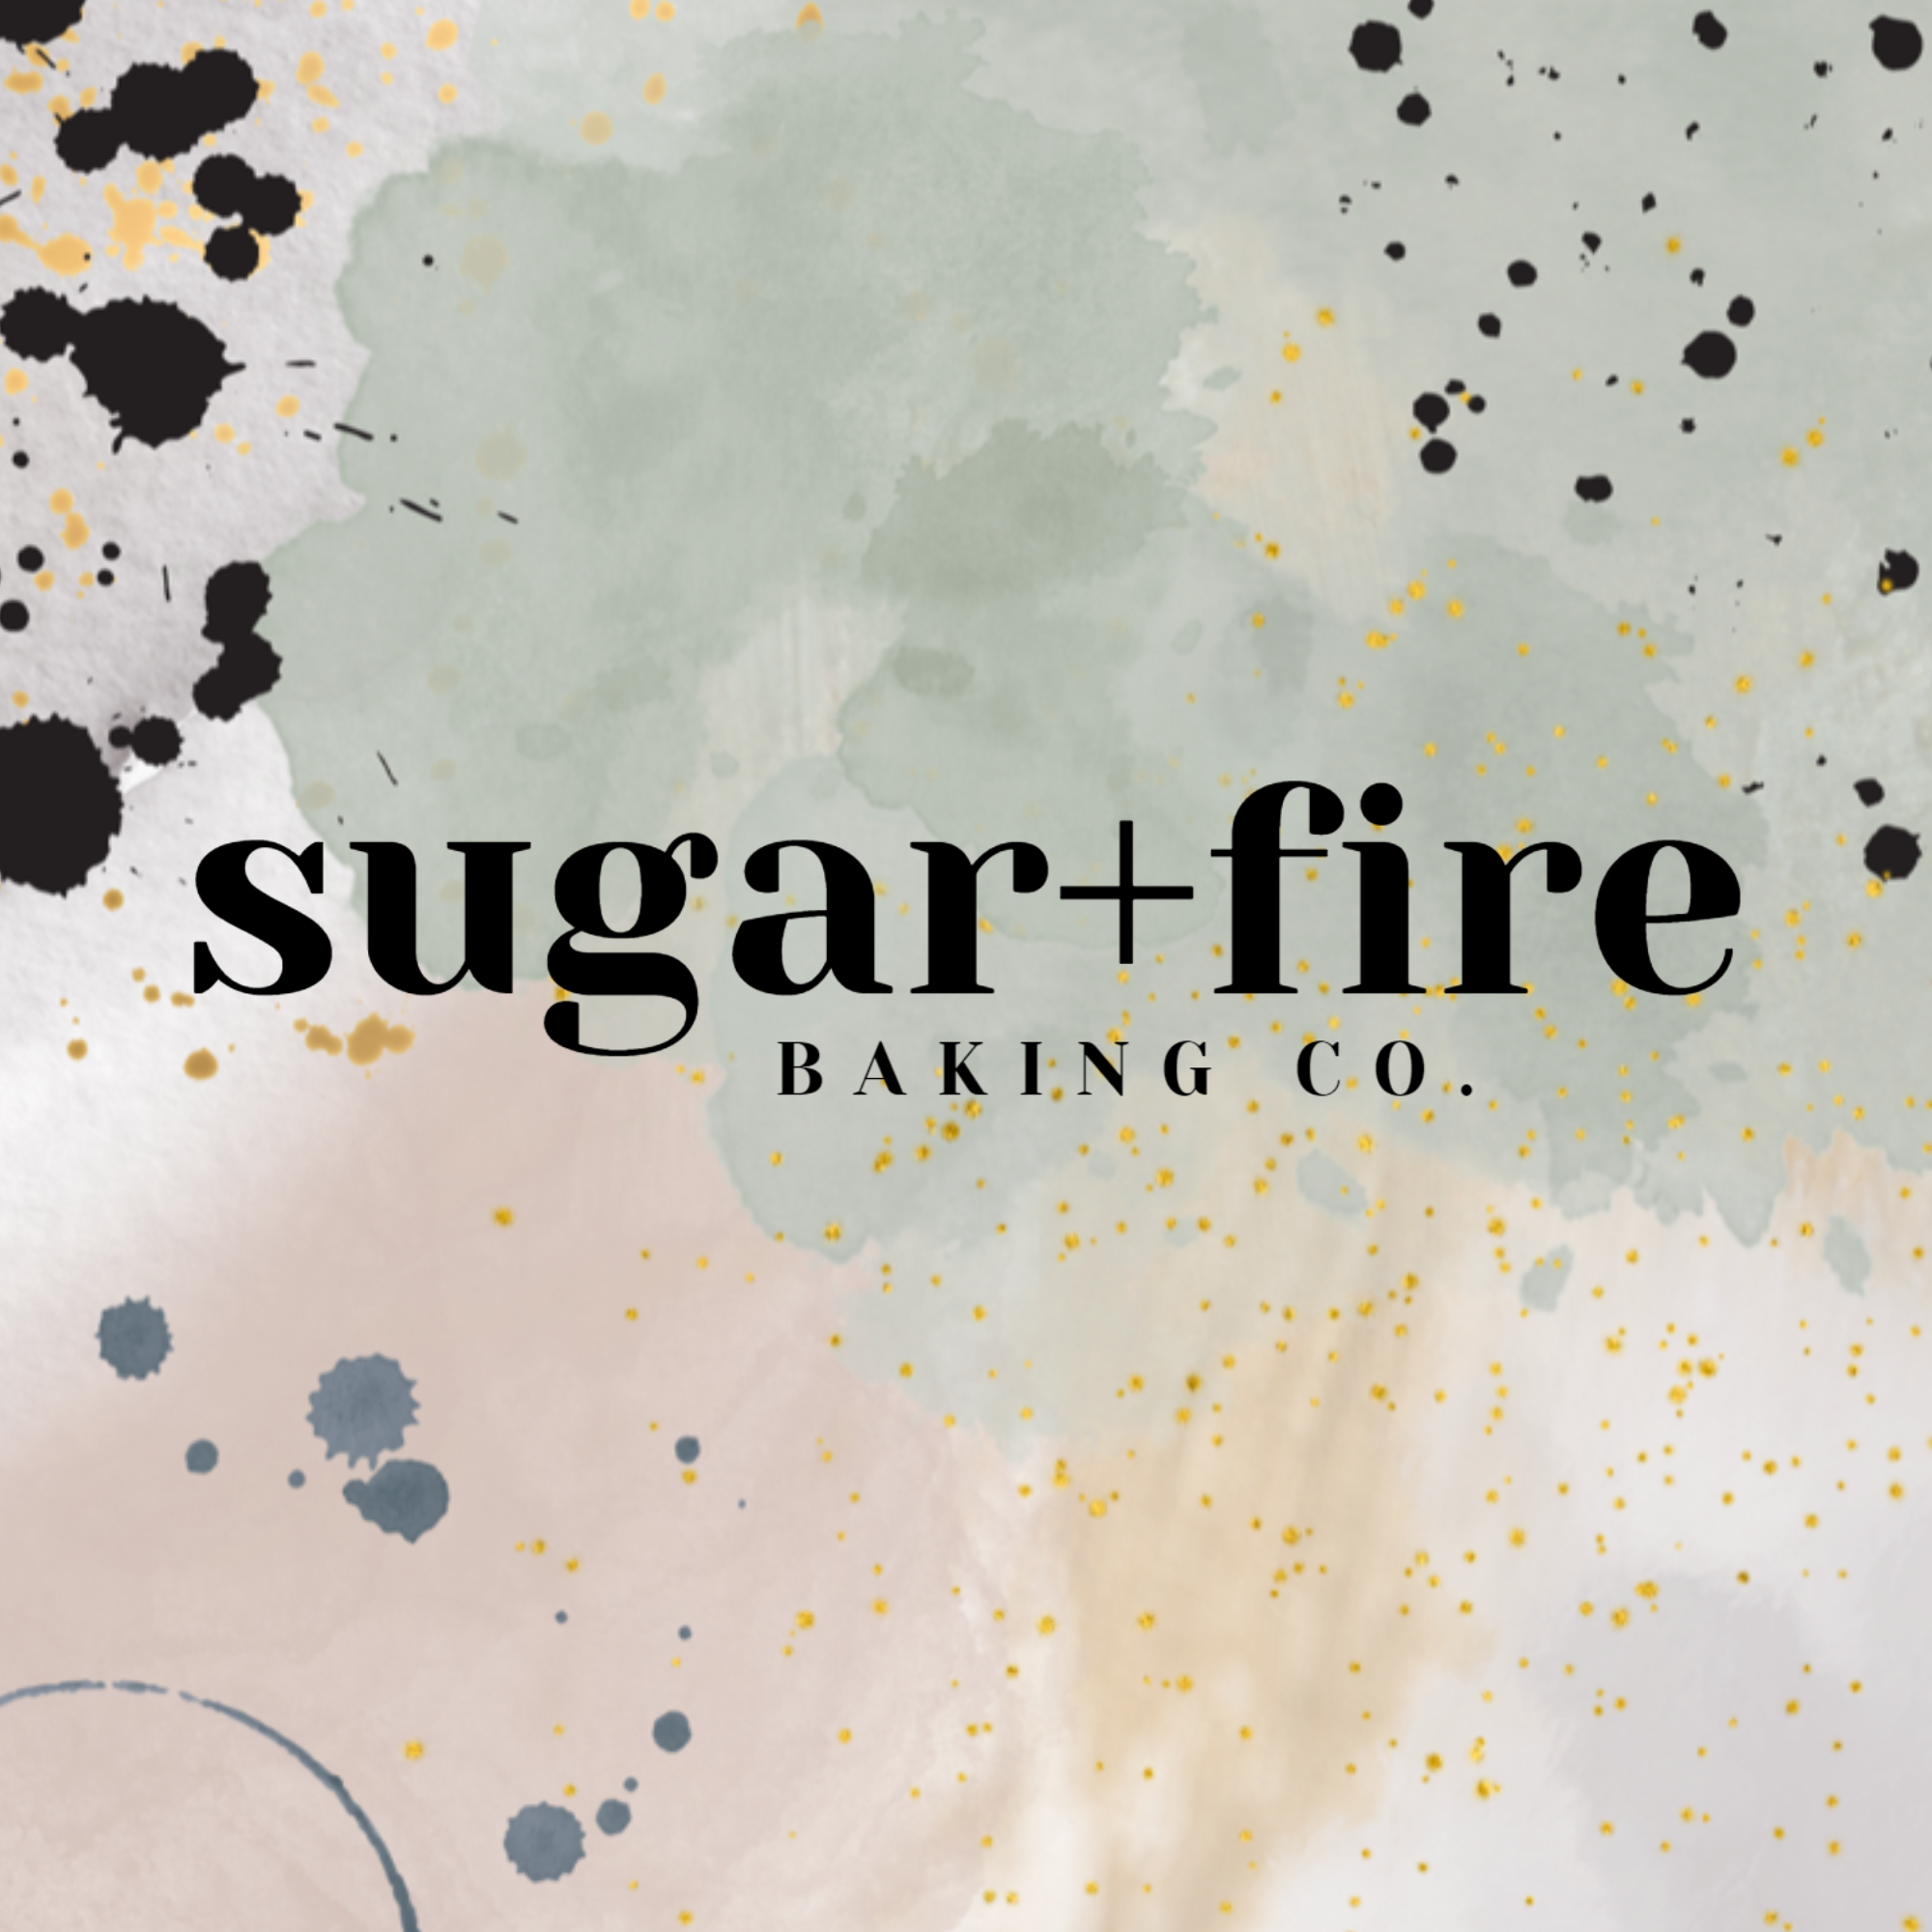 Sugar+Fire Baking Co.